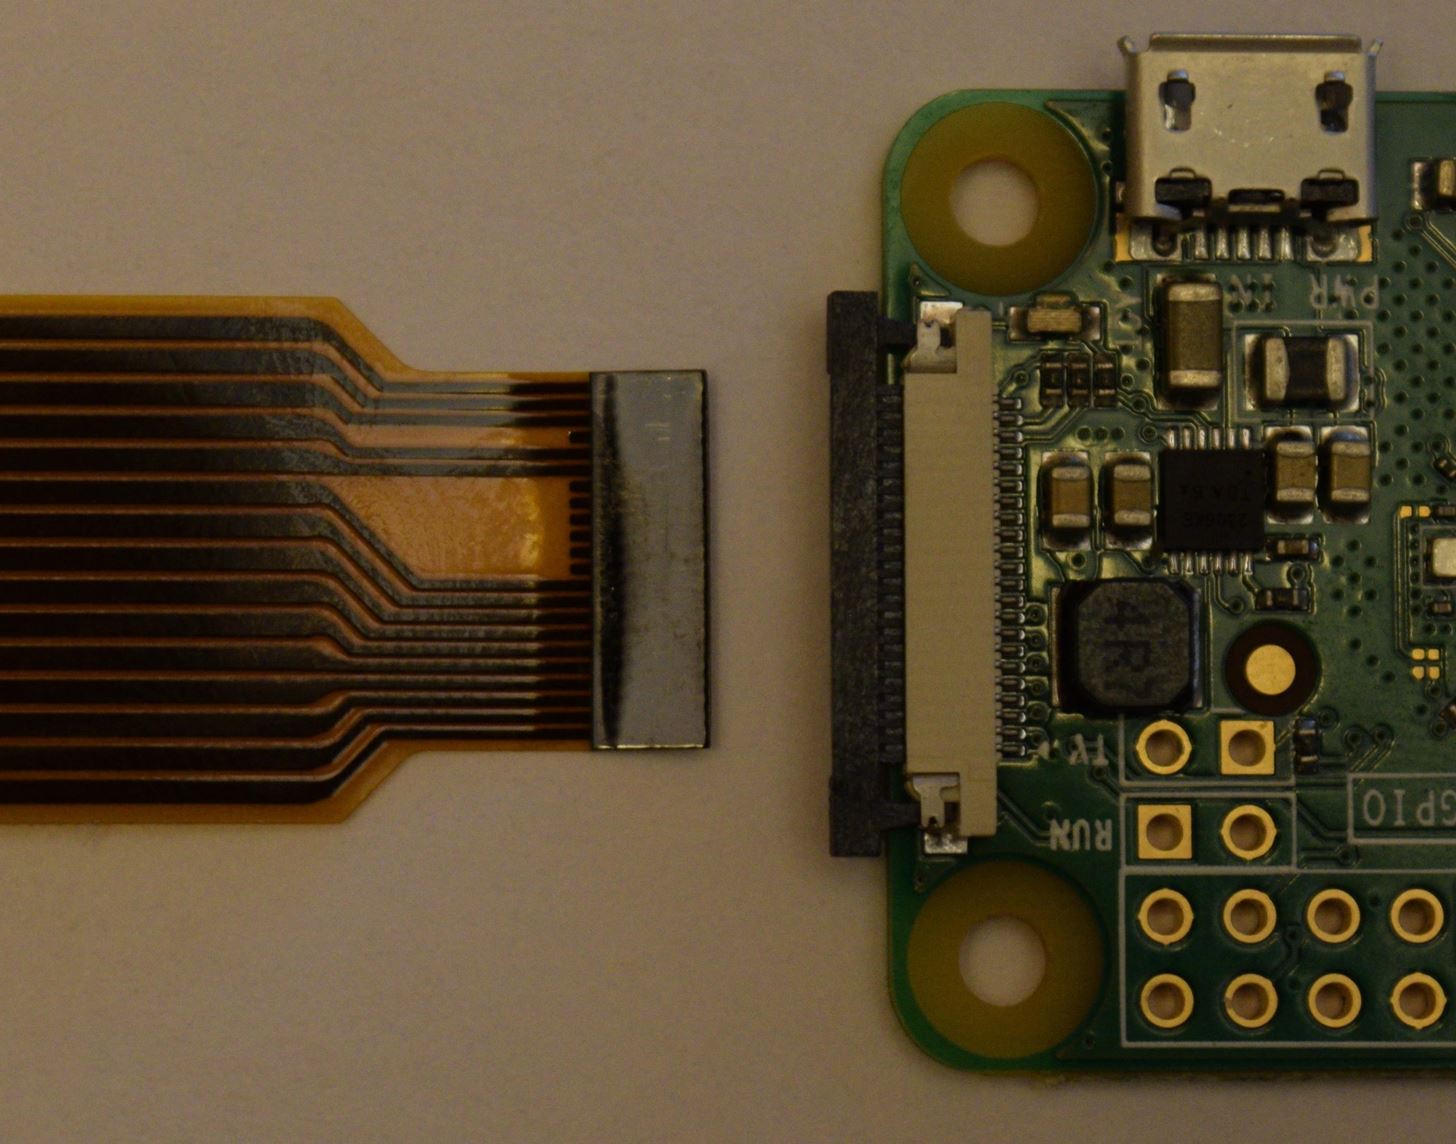 How to Create a Wireless Spy Camera Using a Raspberry Pi